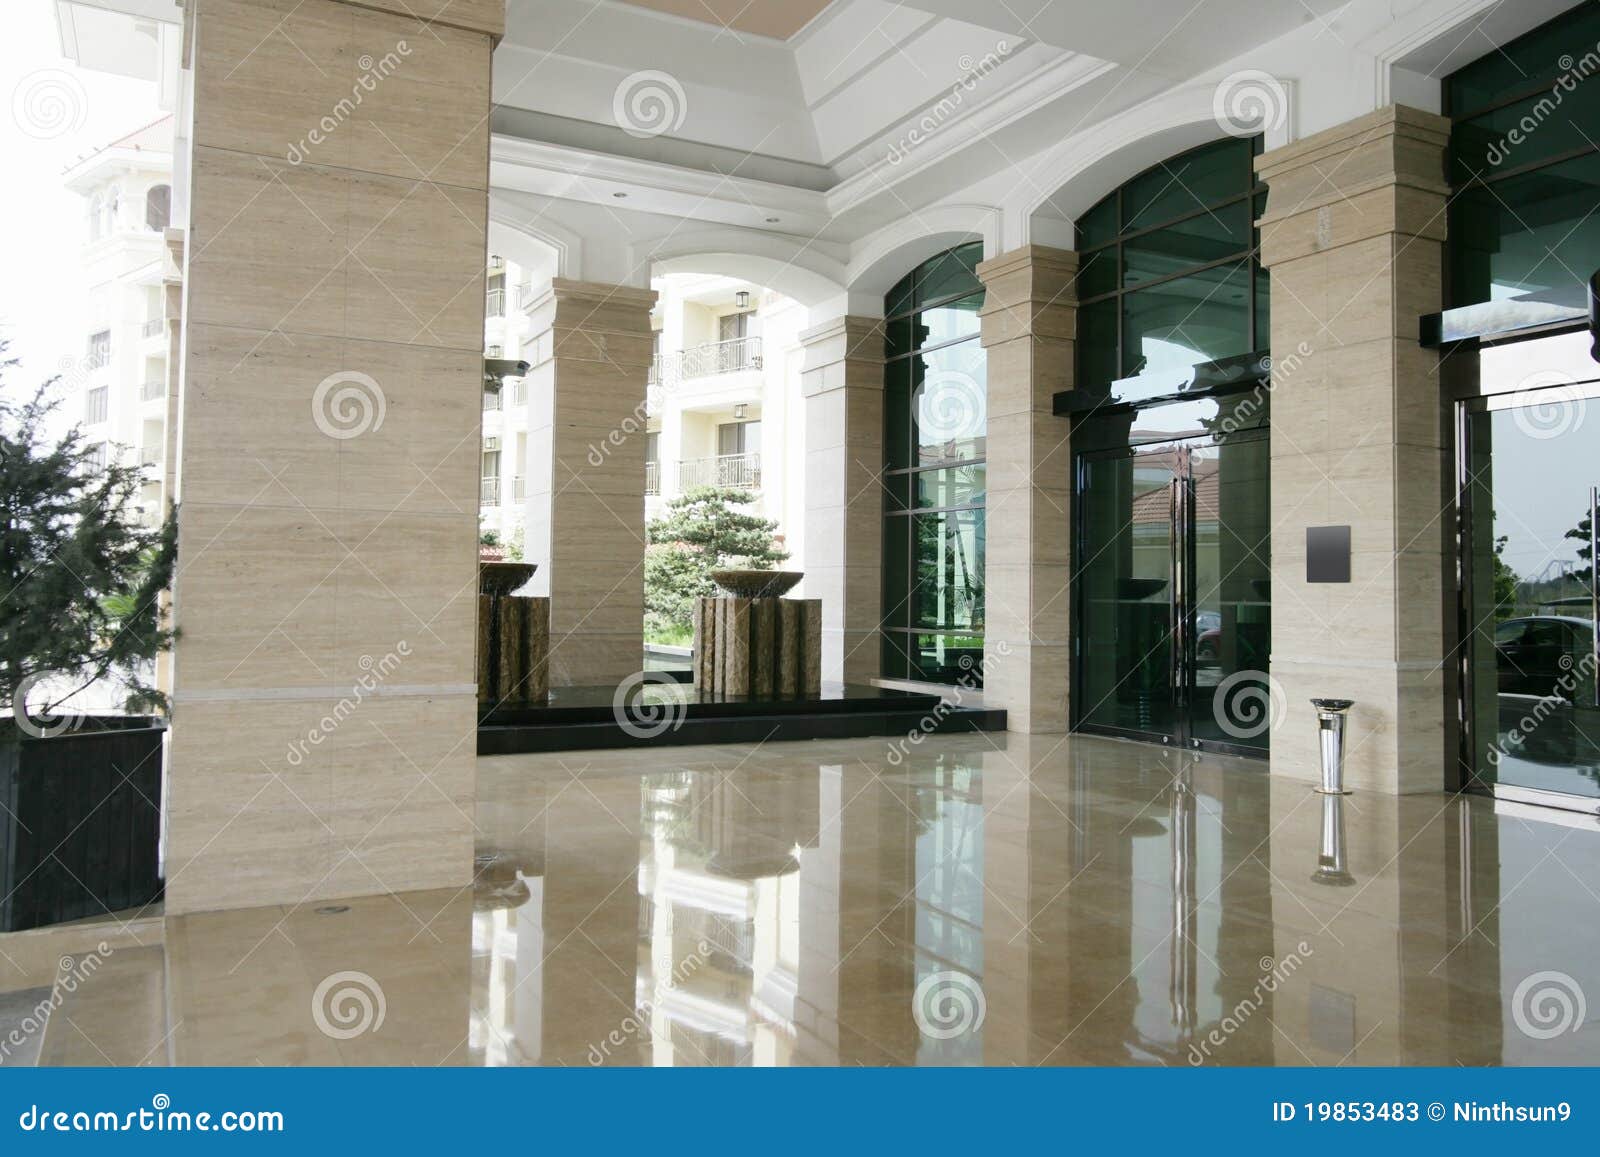 a big spacious clean luxurious hotel entrance